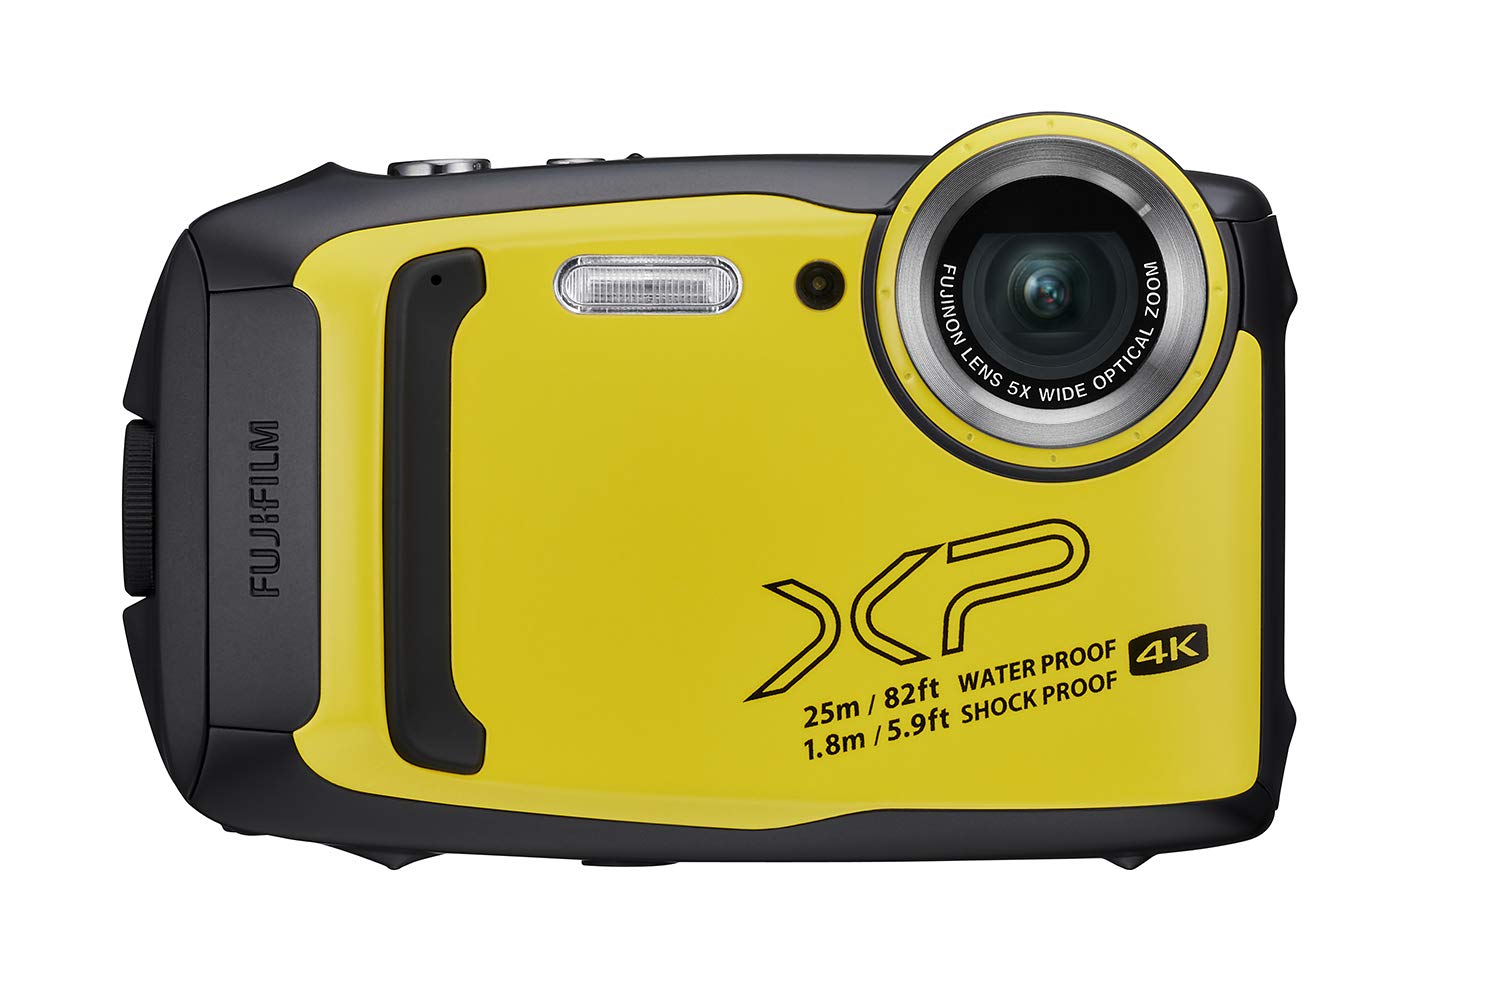 Fujifilm FinePix XP140 Digital Camera, 4K/15P Video, Bluetooth Capability, Waterproof to 82', Yellow